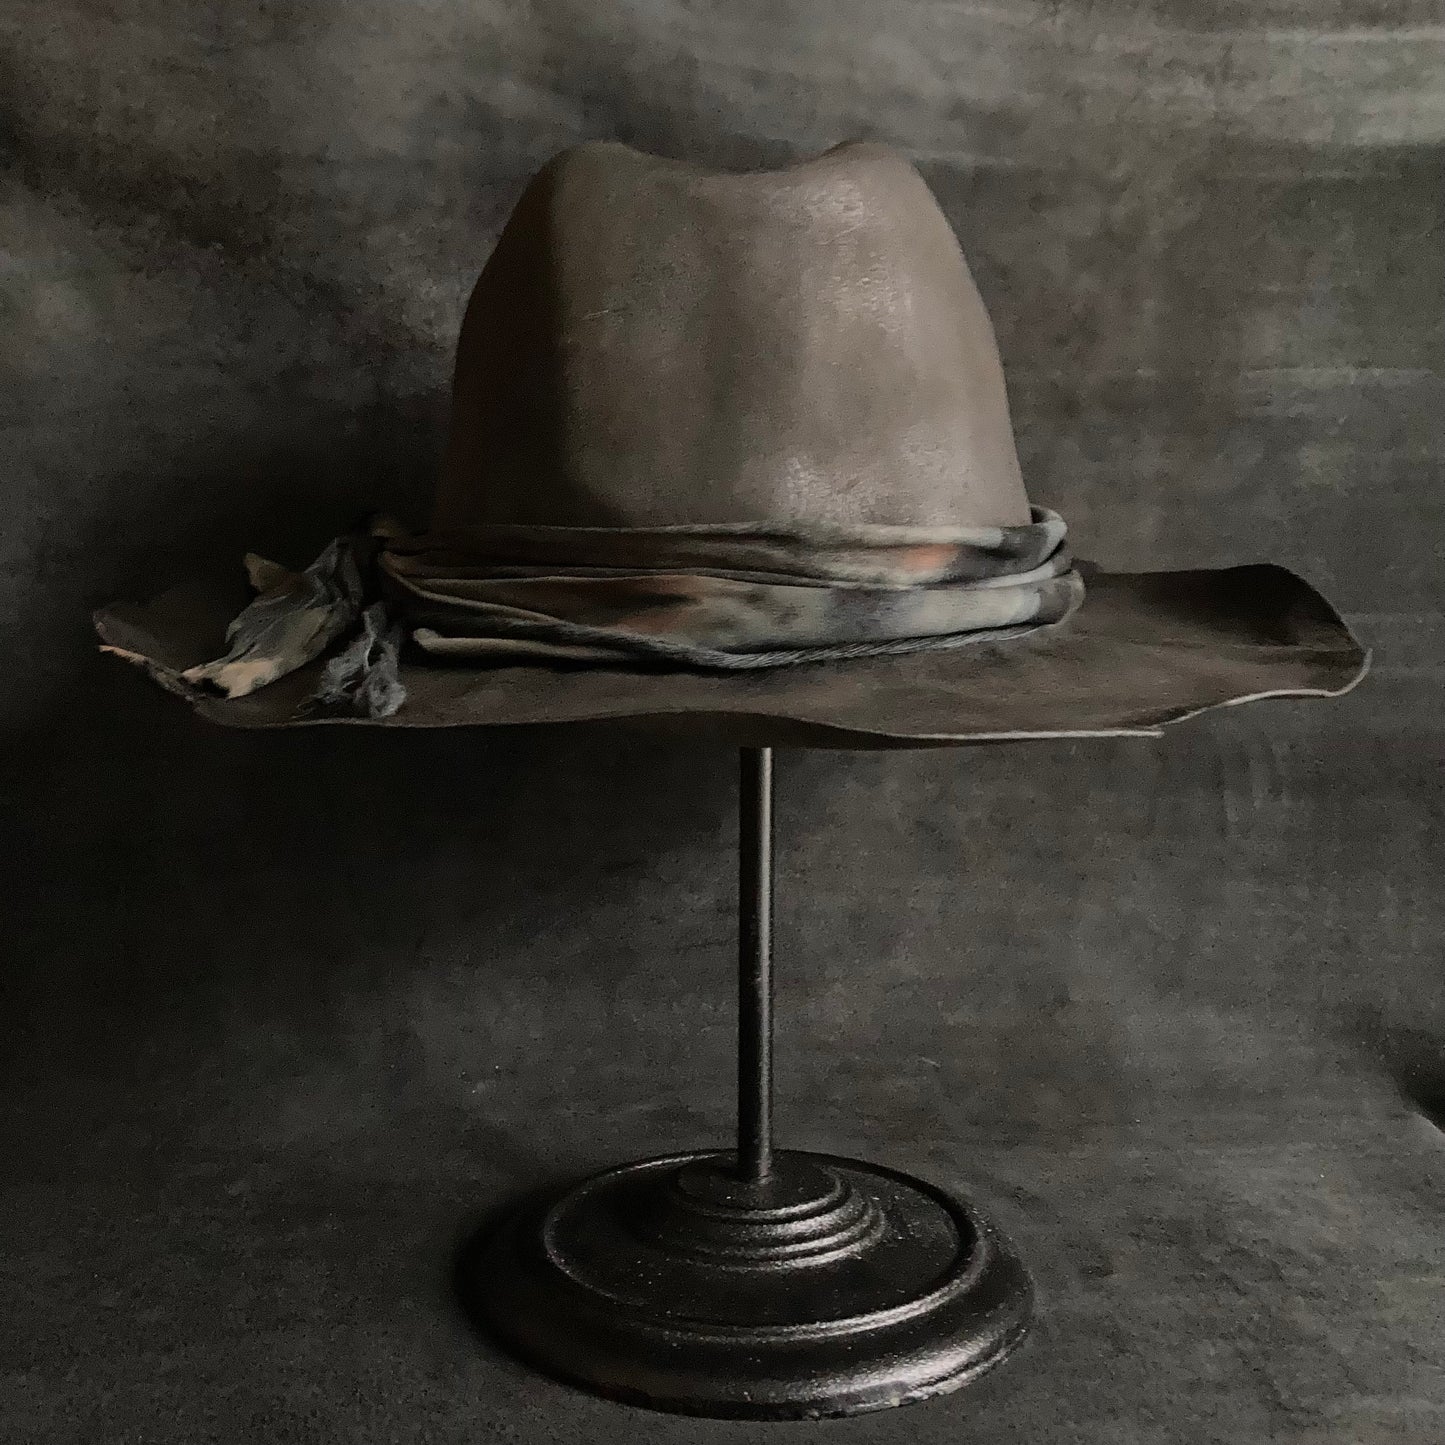 Charcoal burnt western hat